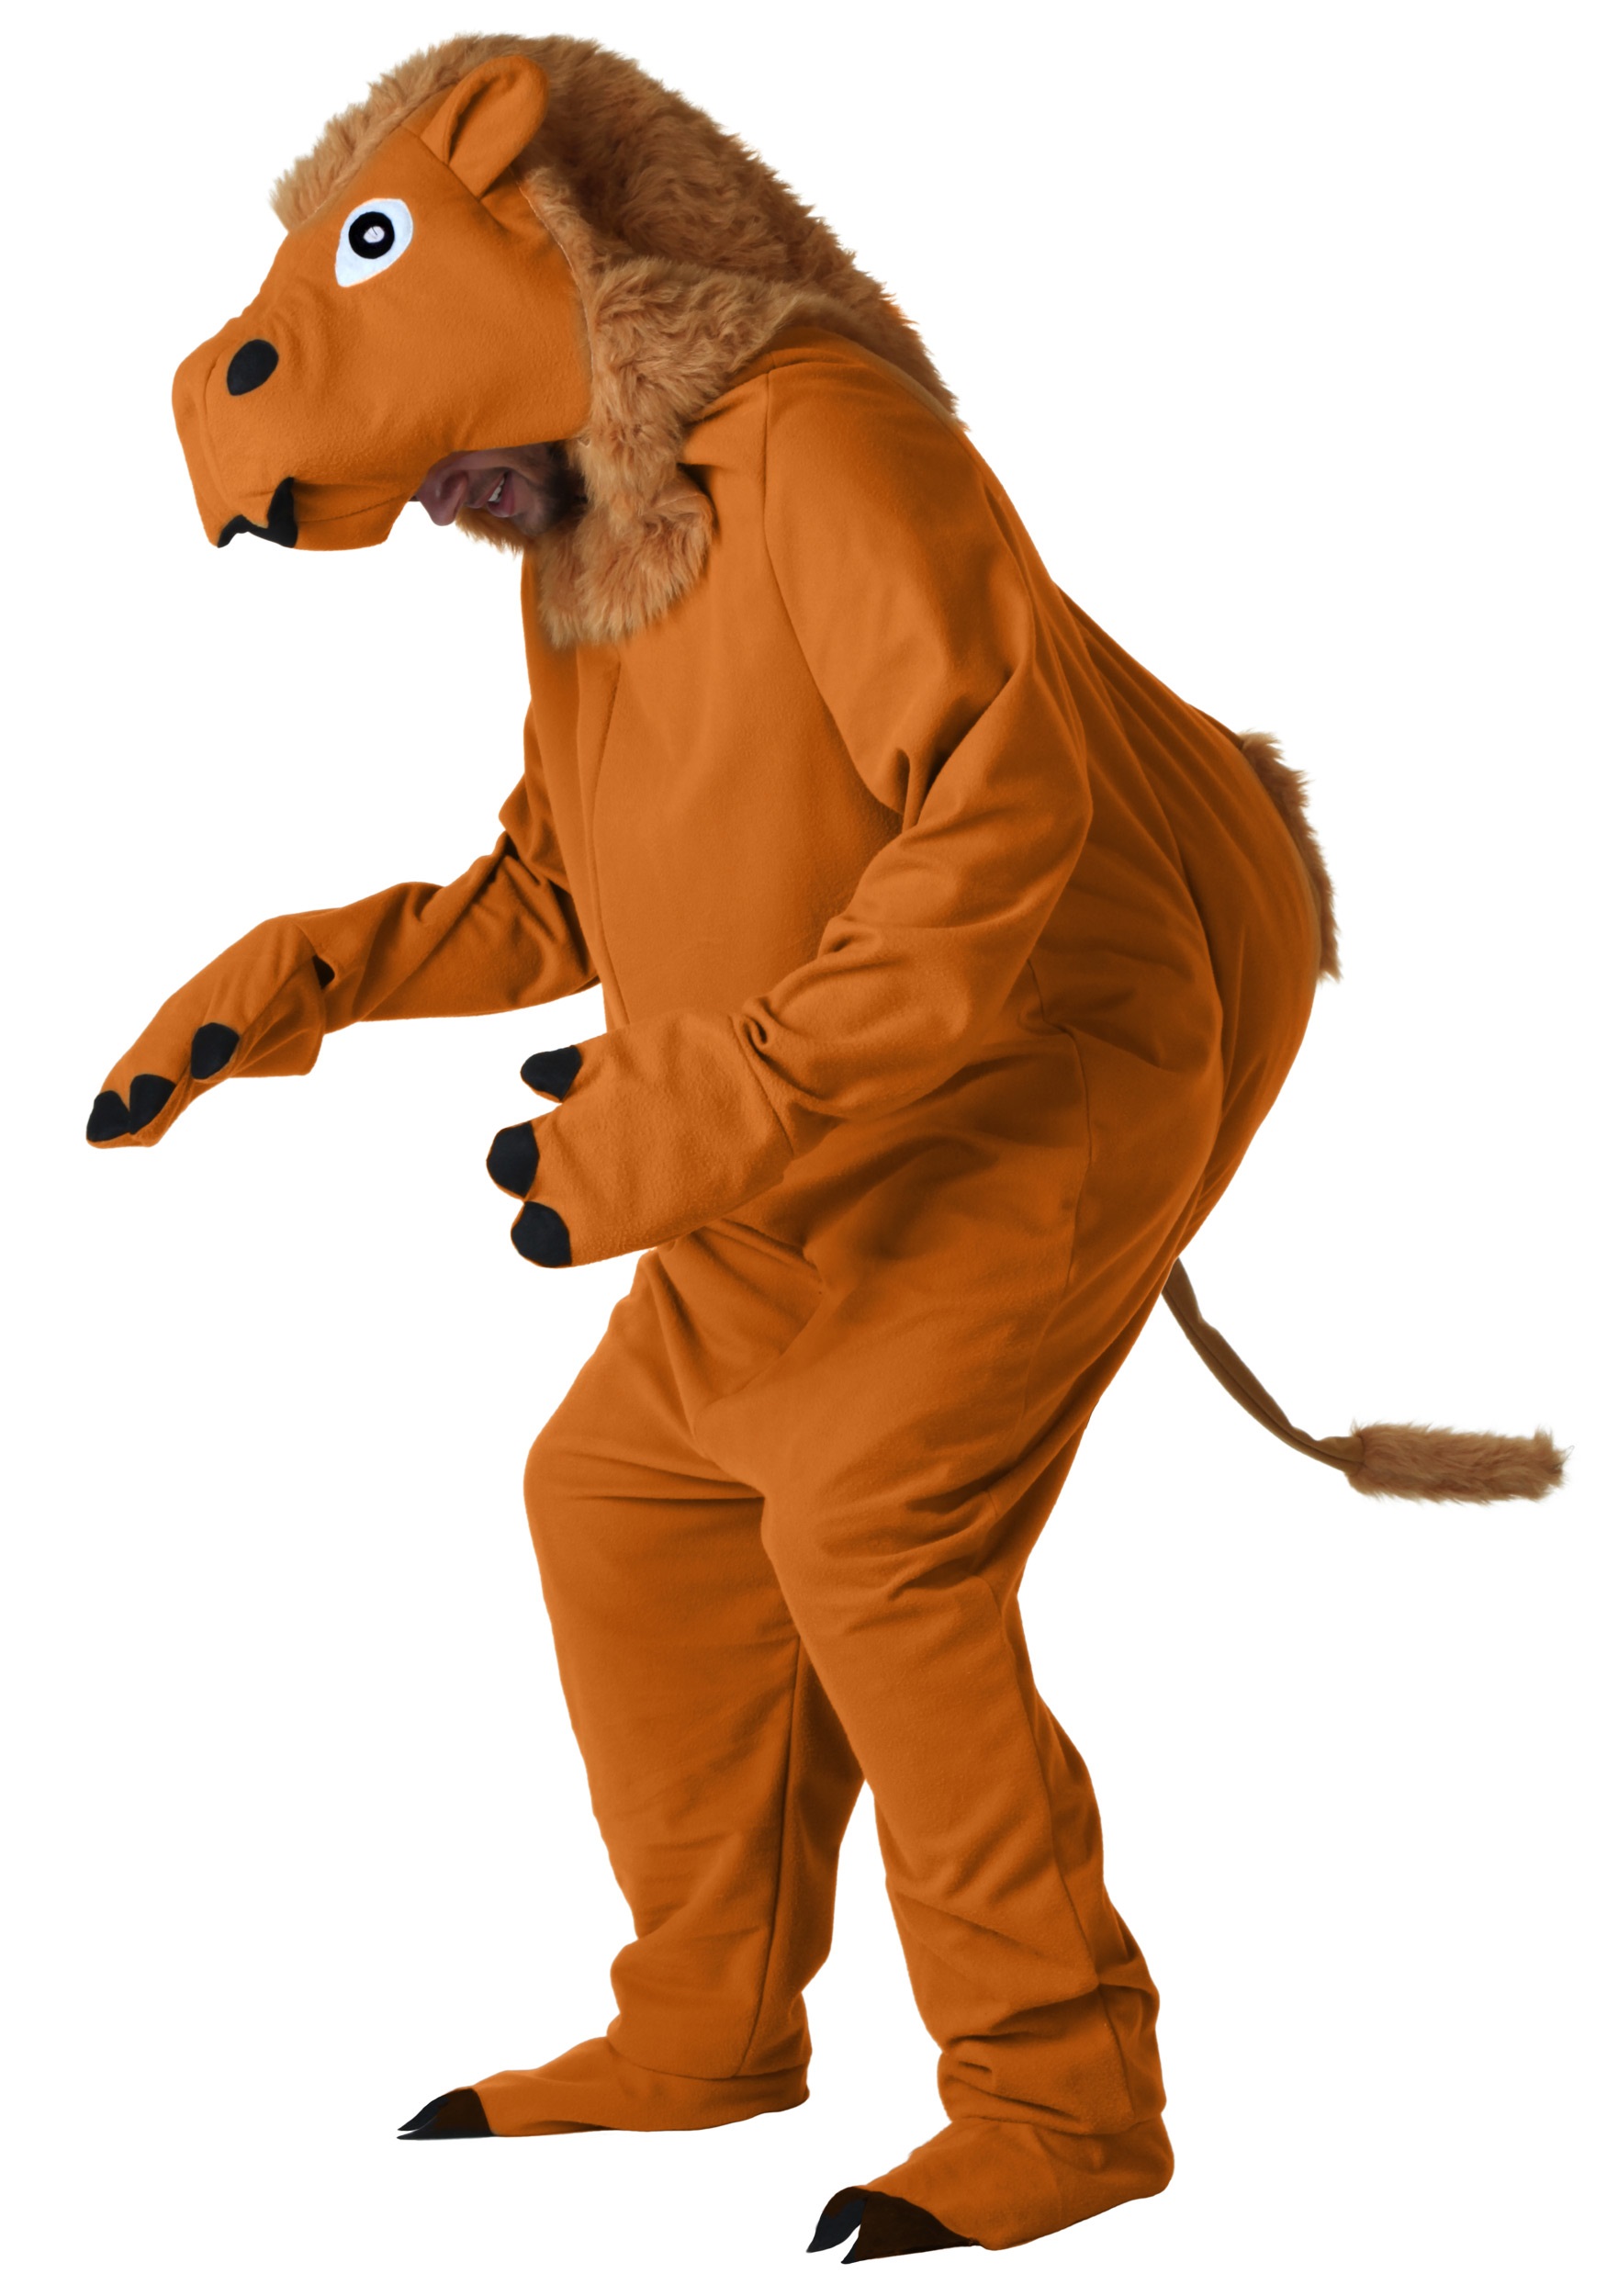 Bodysocks® Inflatable Camel Costume Adult 